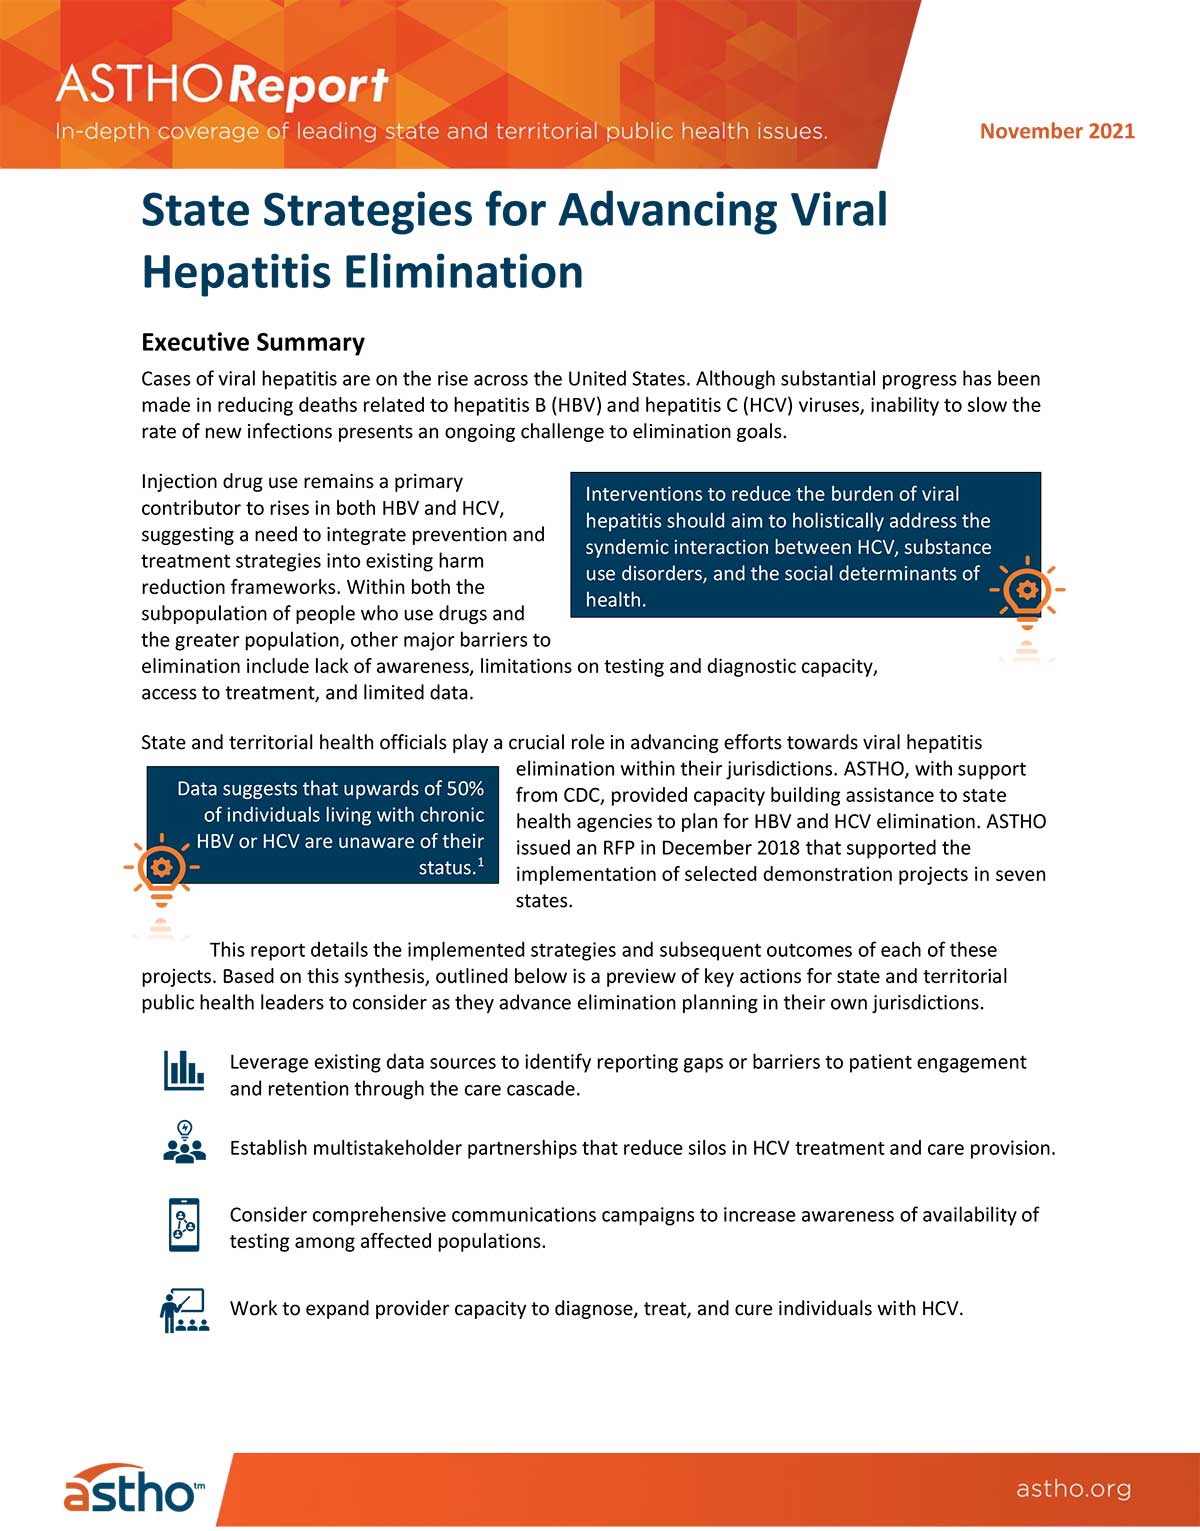 State-Strategies-for-Advancing-Viral-Hepatitis-Elimination.jpg